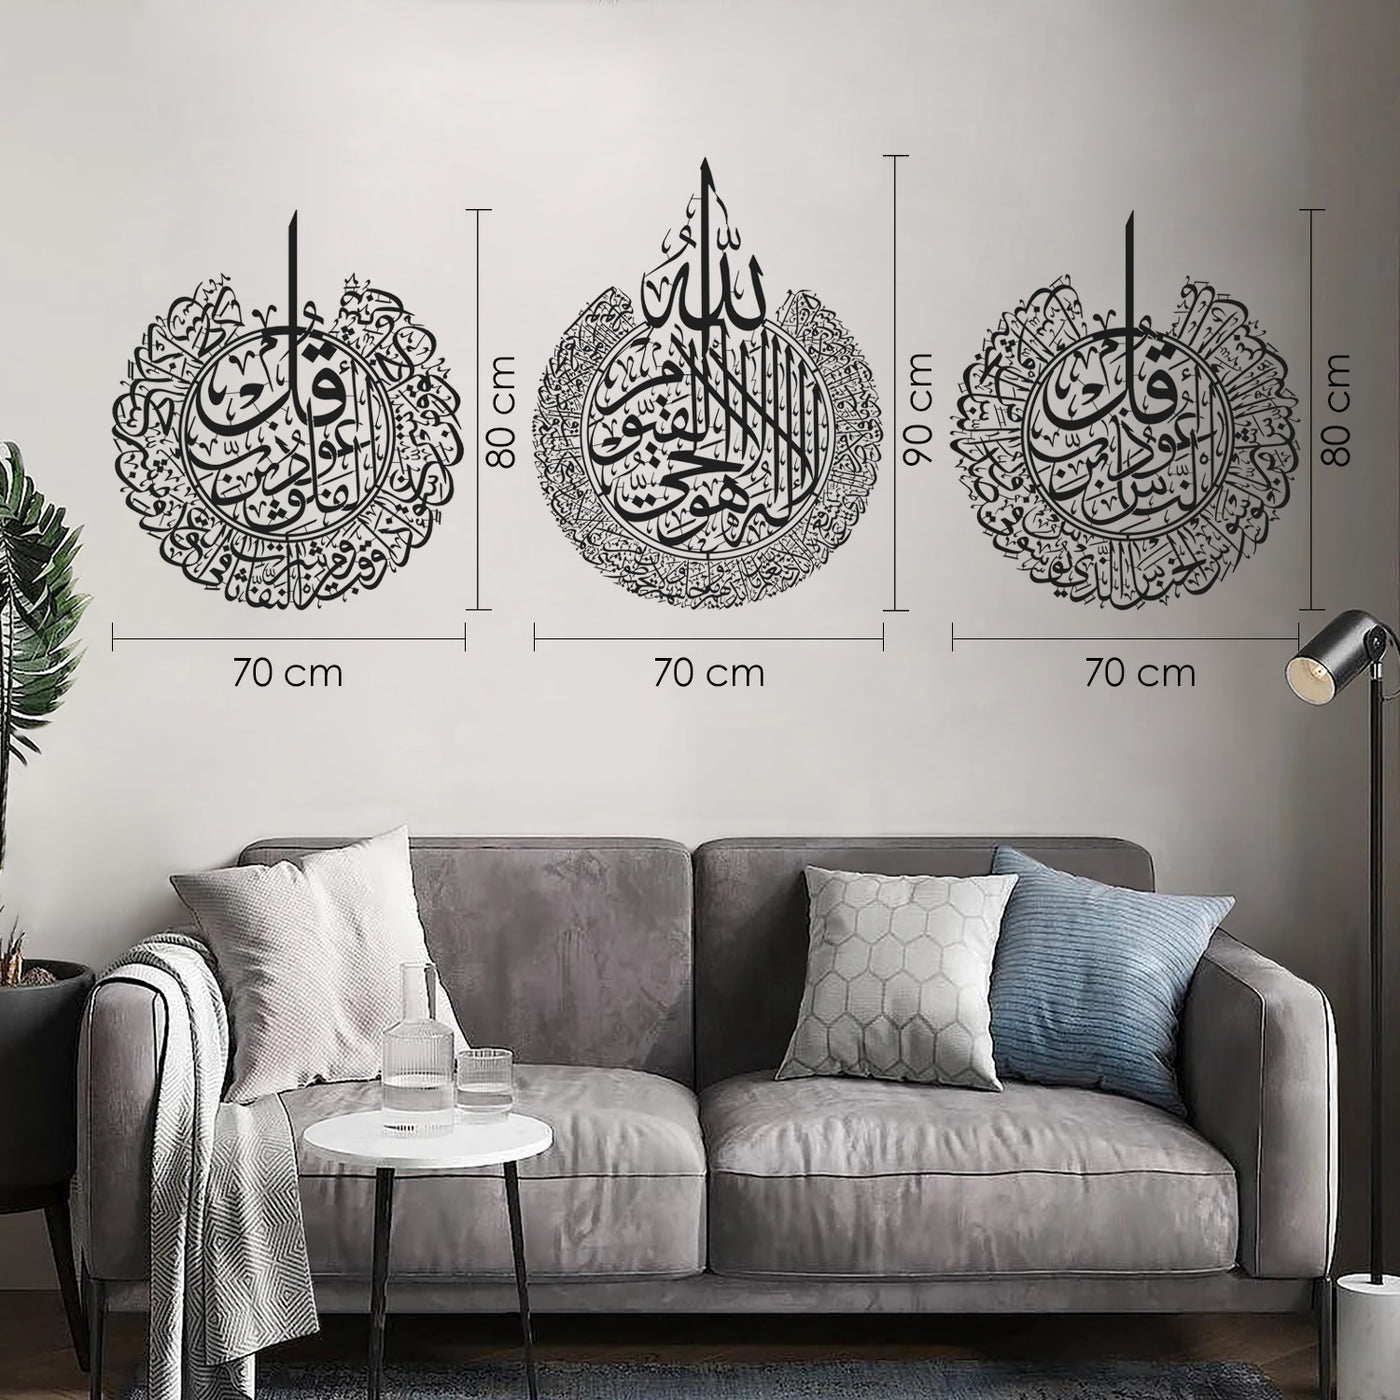 Ayatul Kursi, Surah Al-Nâs and Surah Al-Falaq Metal Islamic Wall Art 3 Set - WAM079